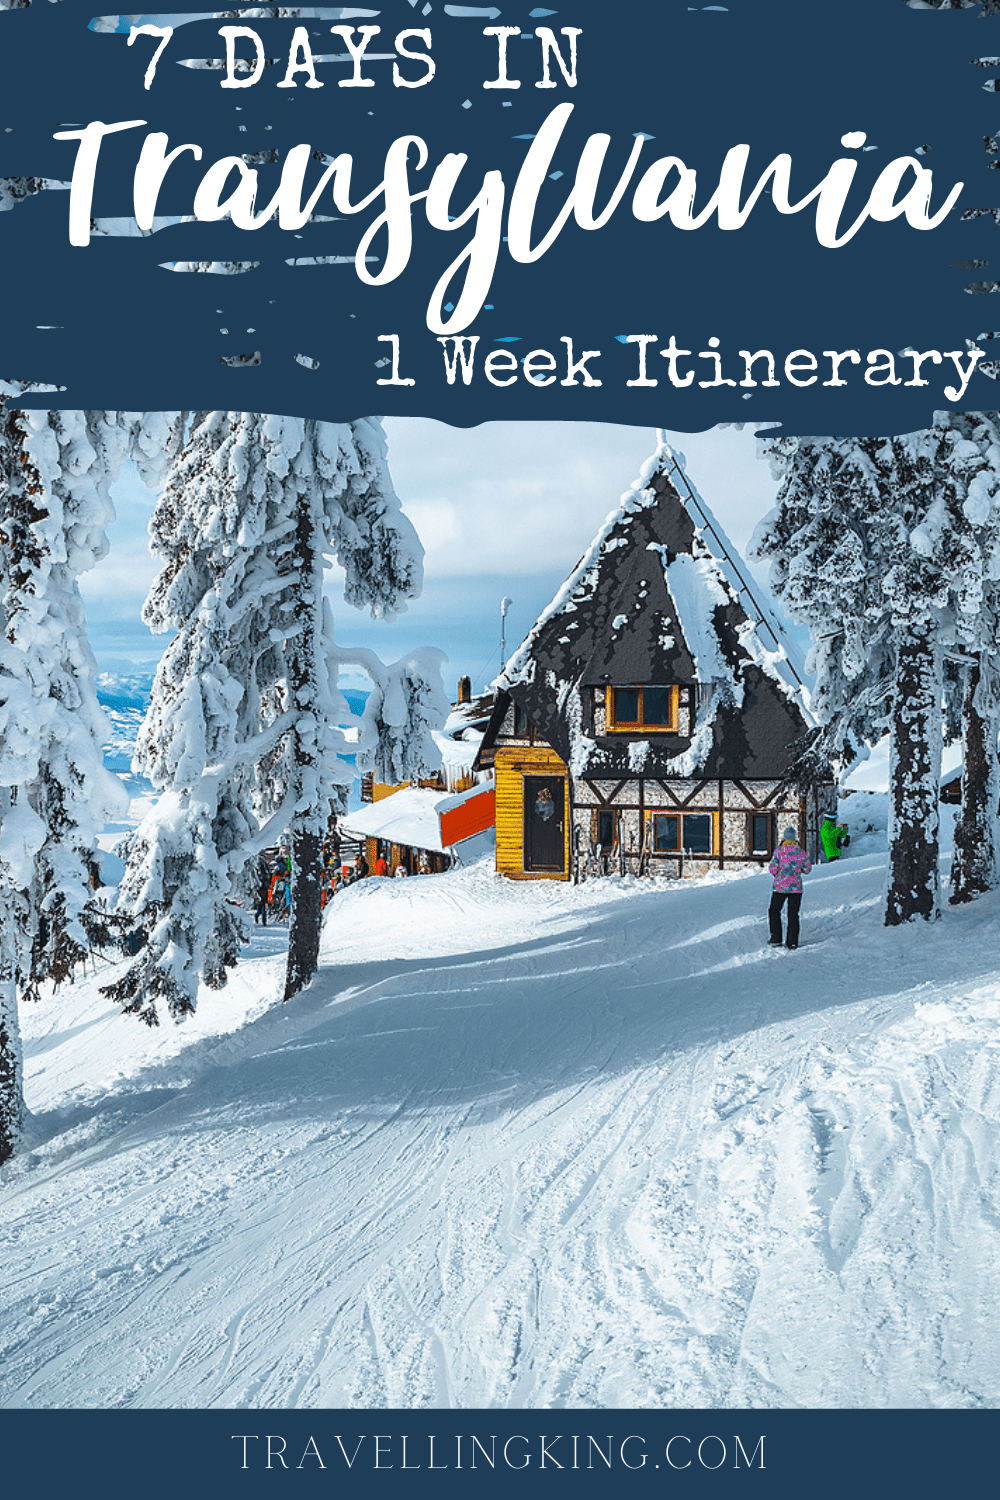 7 Days in Transylvania - 1 Week itinerary